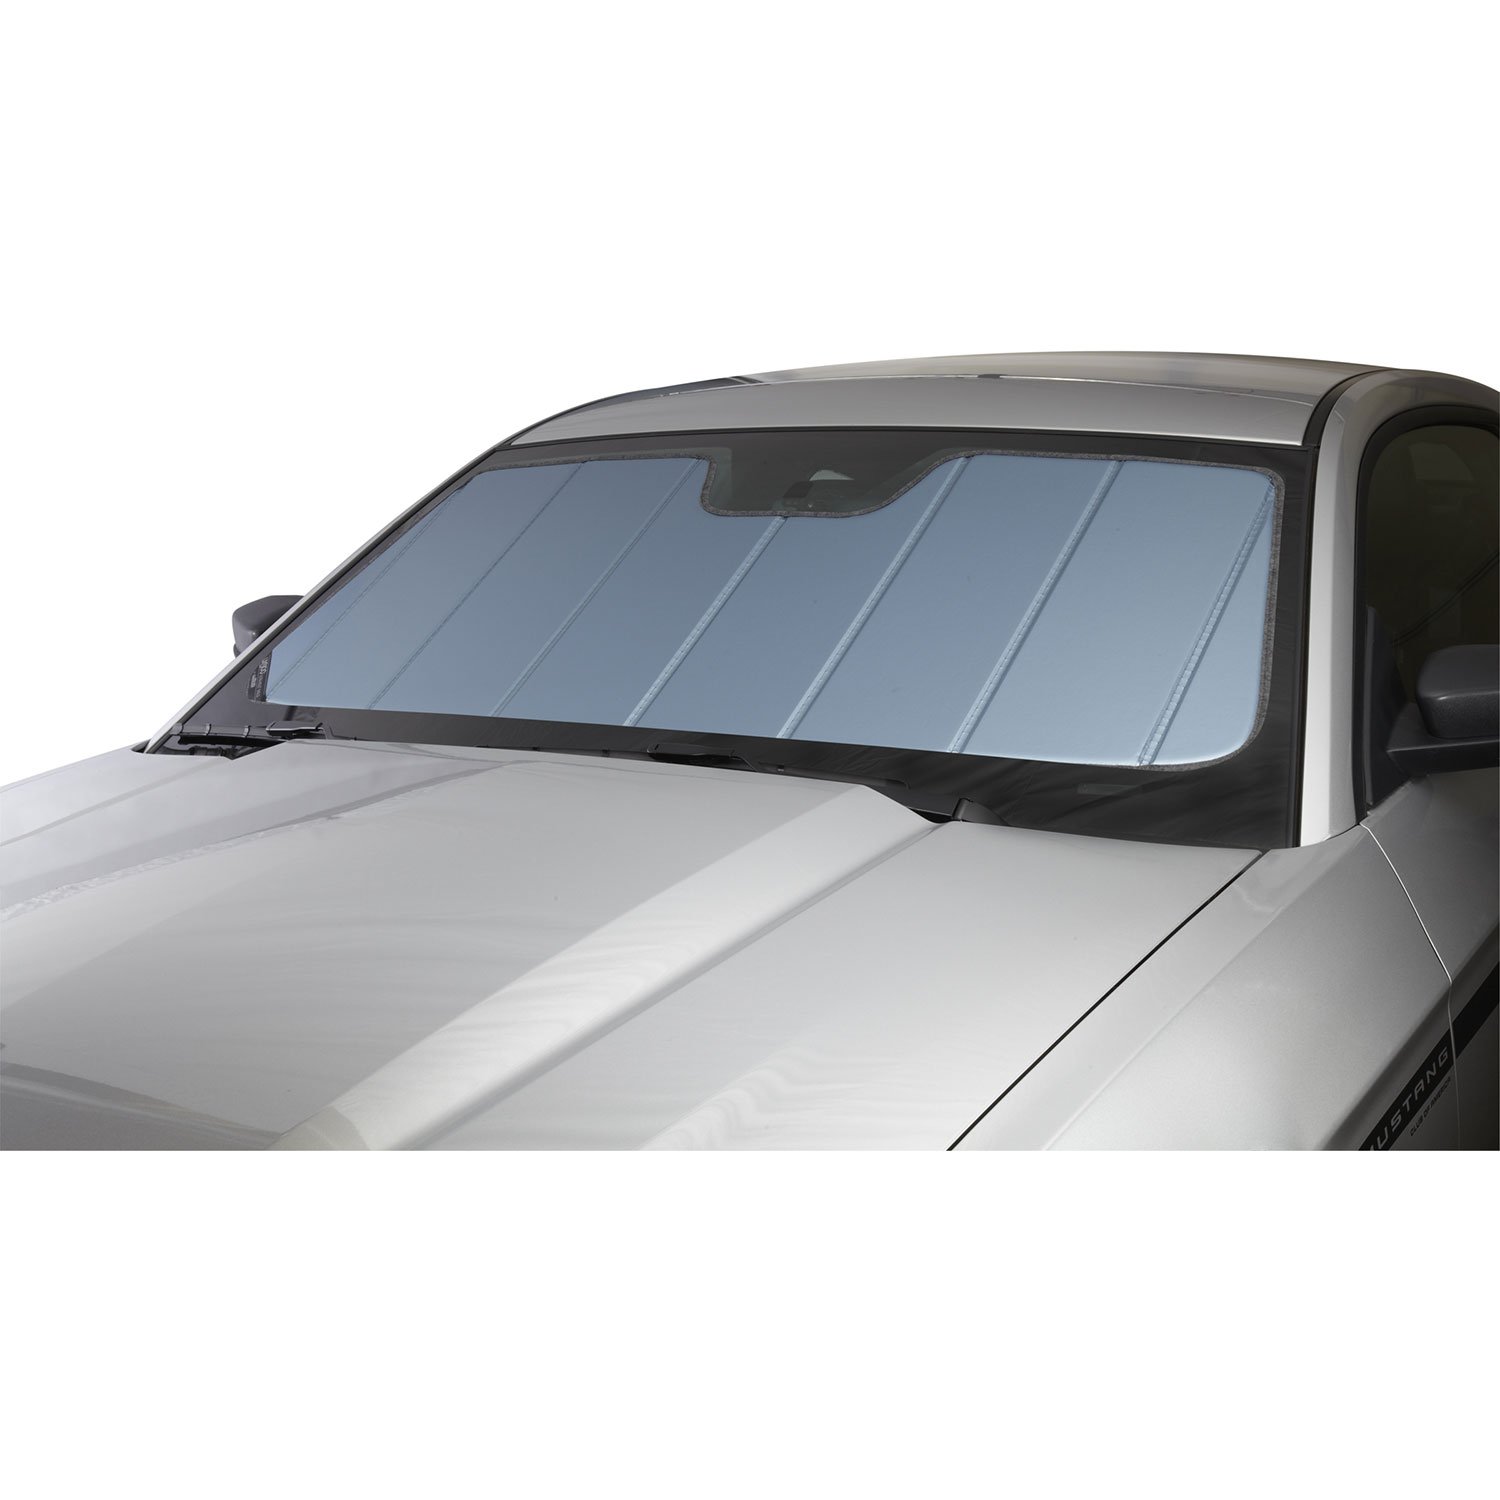 Covercraft UVS100 Custom Sonnenschutz | UV11288BL | Kompatibel mit Select Toyota RAV4 Modellen, Blau Metallic von Covercraft